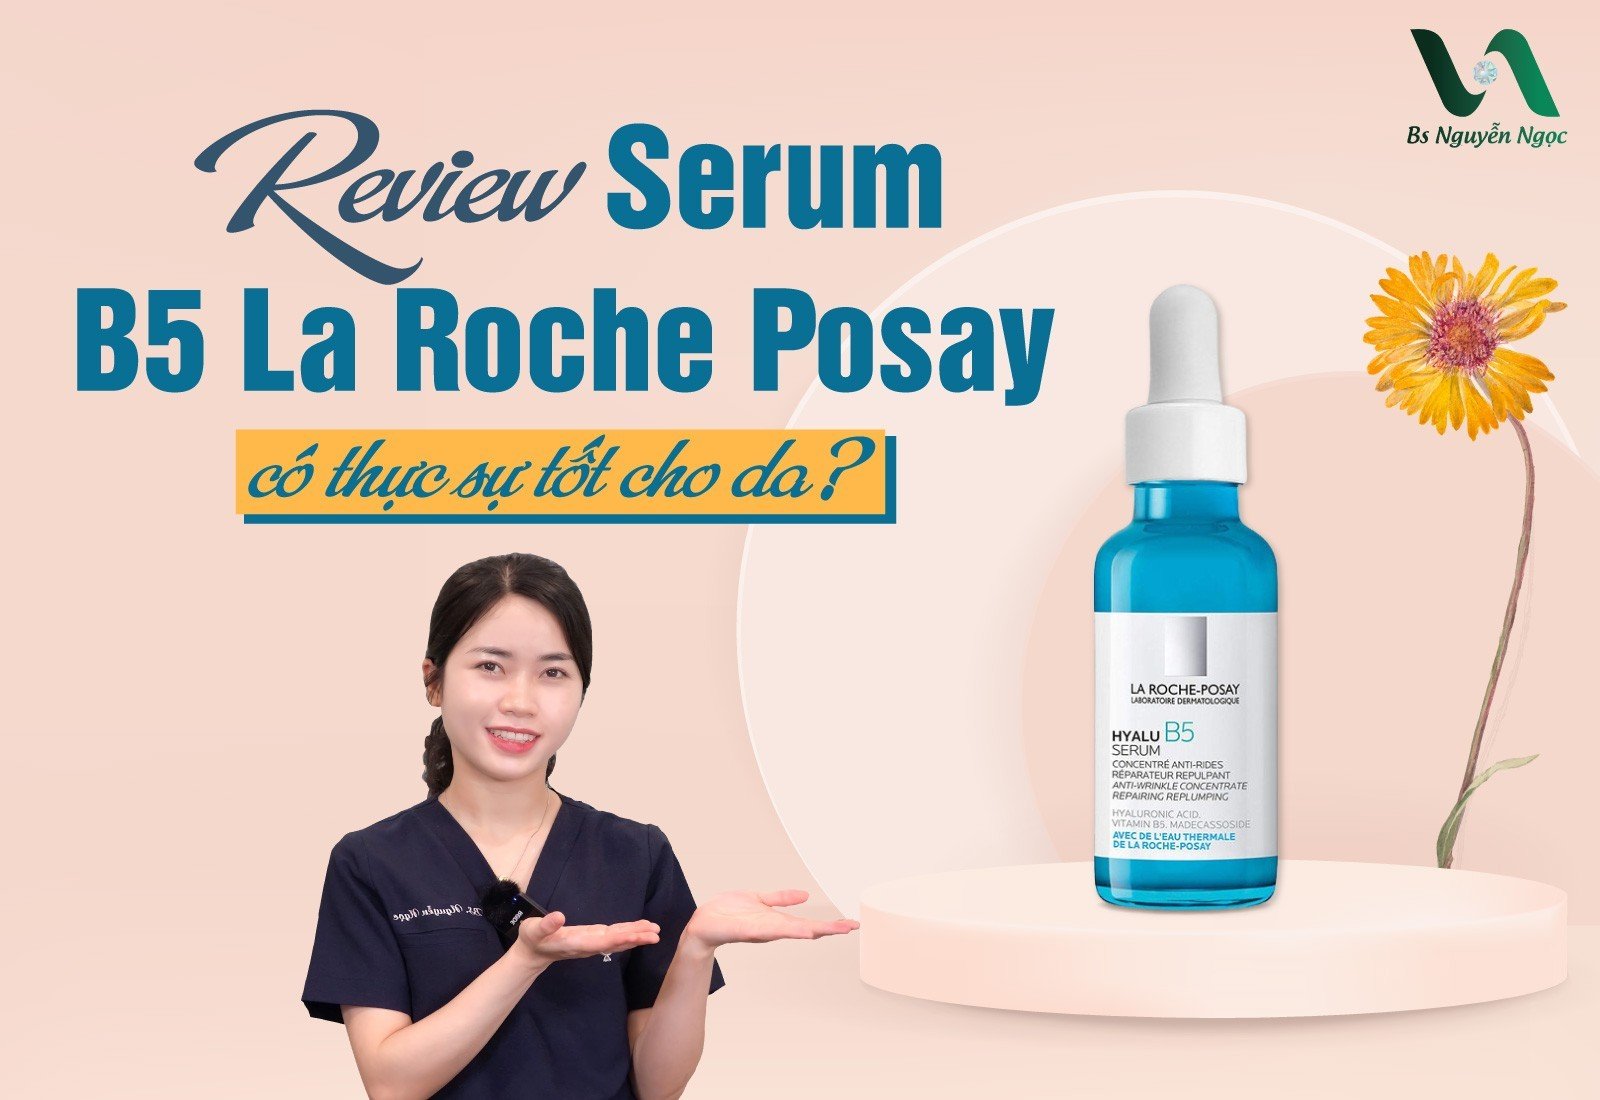 Review Serum B5 La Roche Posay có thực sự tốt cho da?